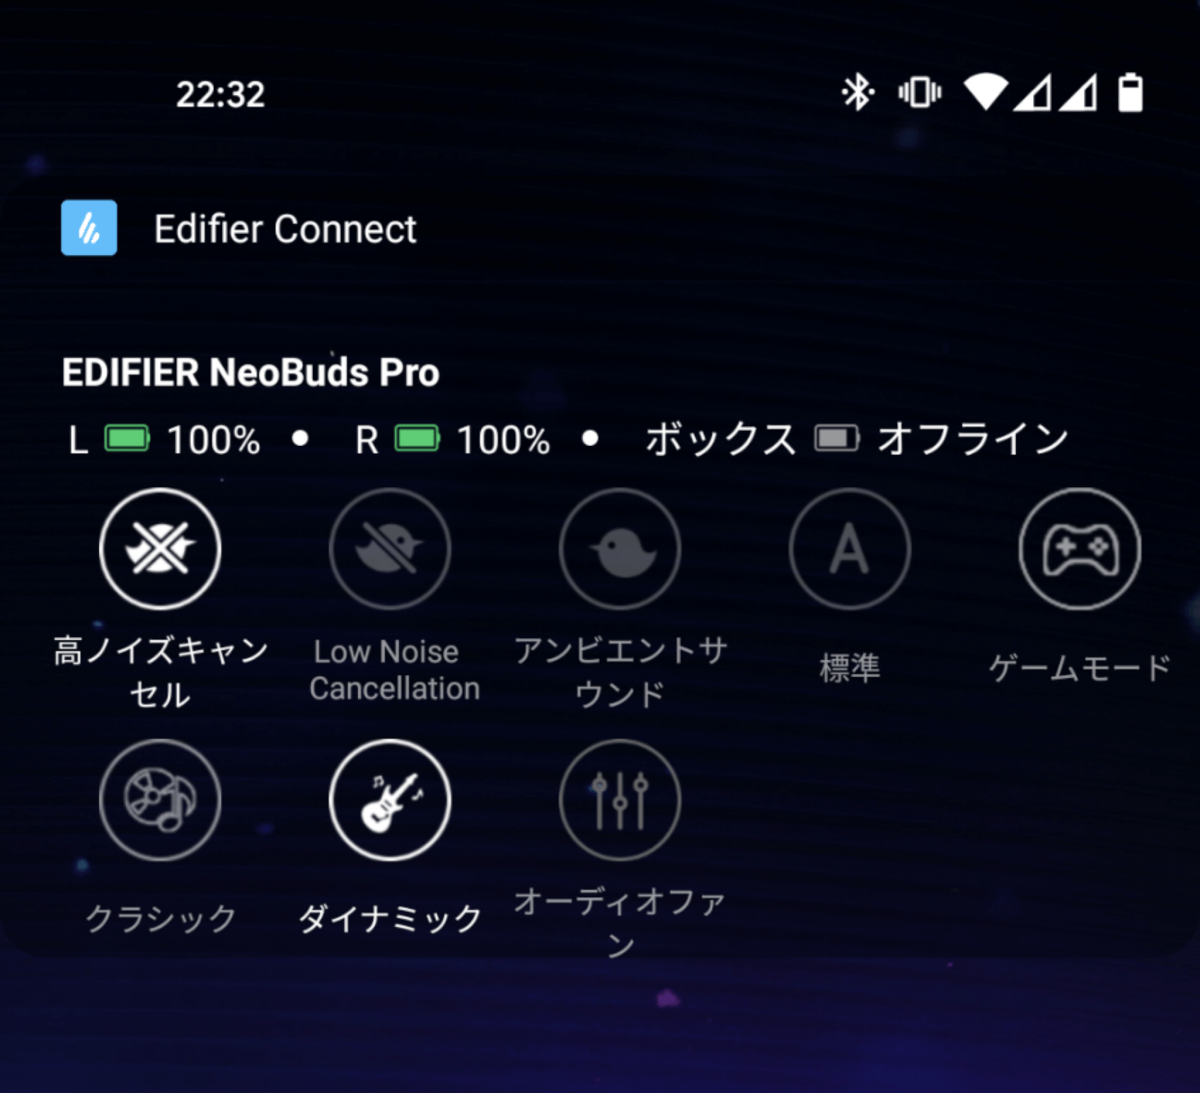 EDIFIER NeoBuds Pro ANC対応完全ワイヤレスイヤホン 専用アプリ ウィジェット 実際の表示